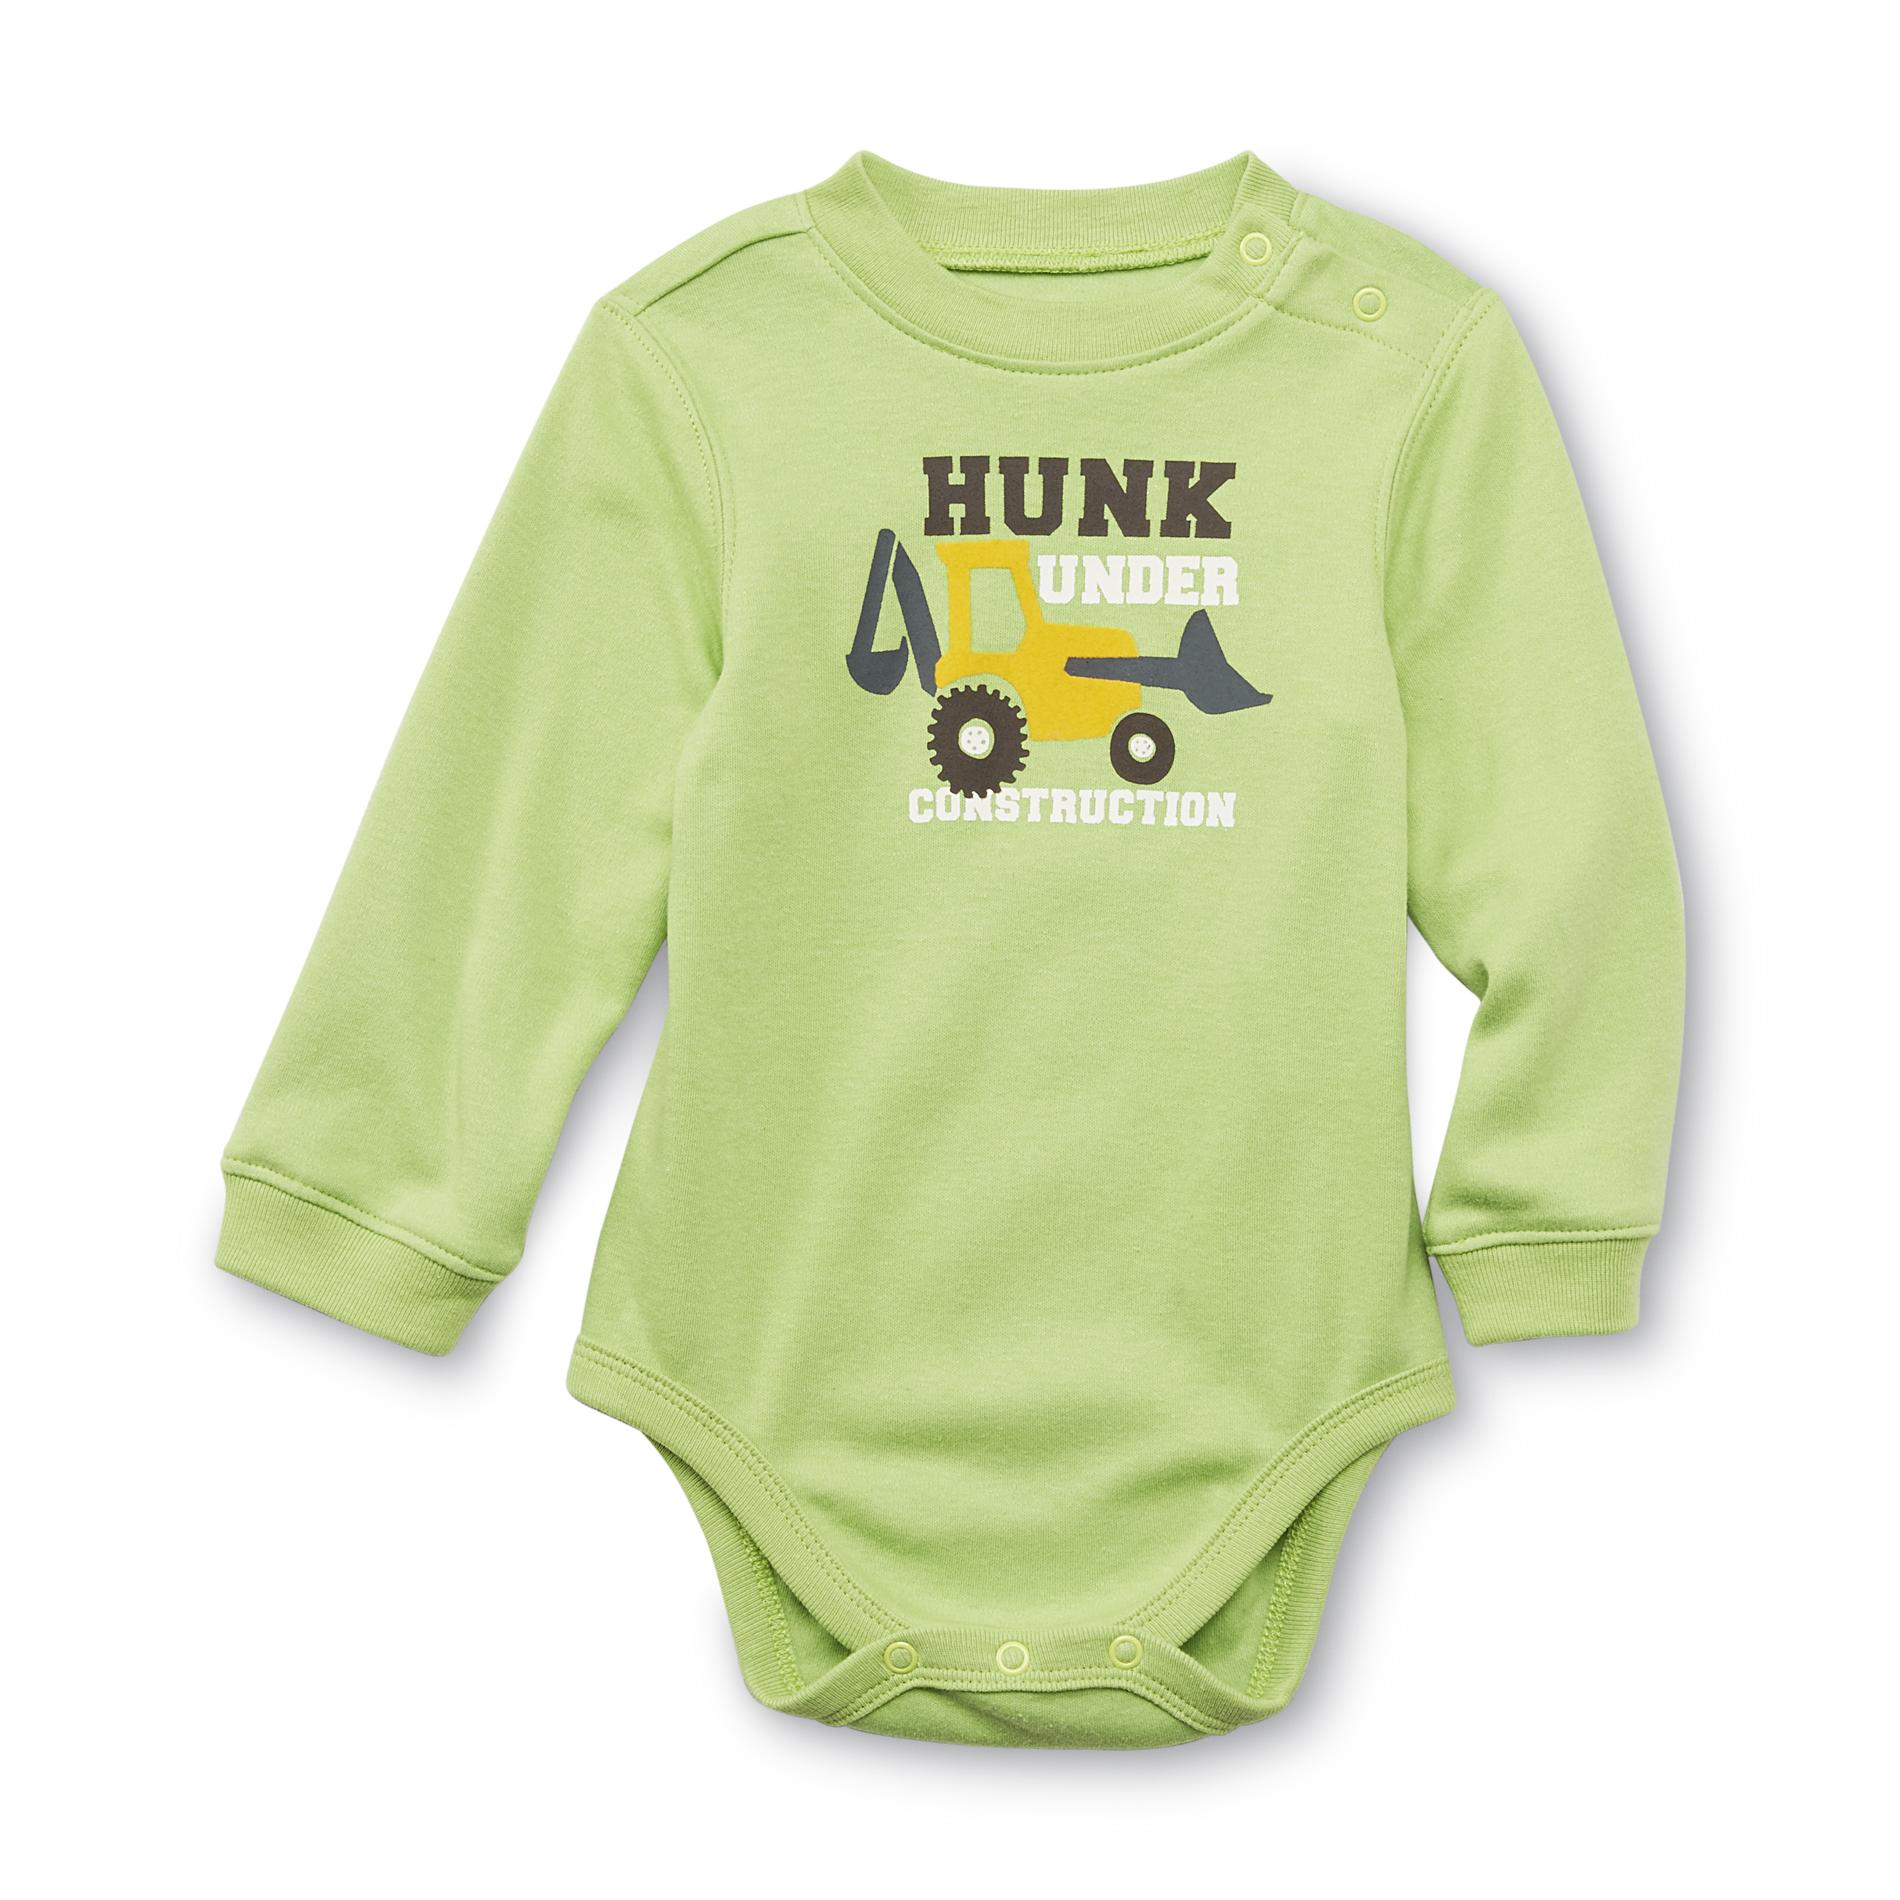 Small Wonders Newborn Boy's Long-Sleeve Bodysuit - Hunk